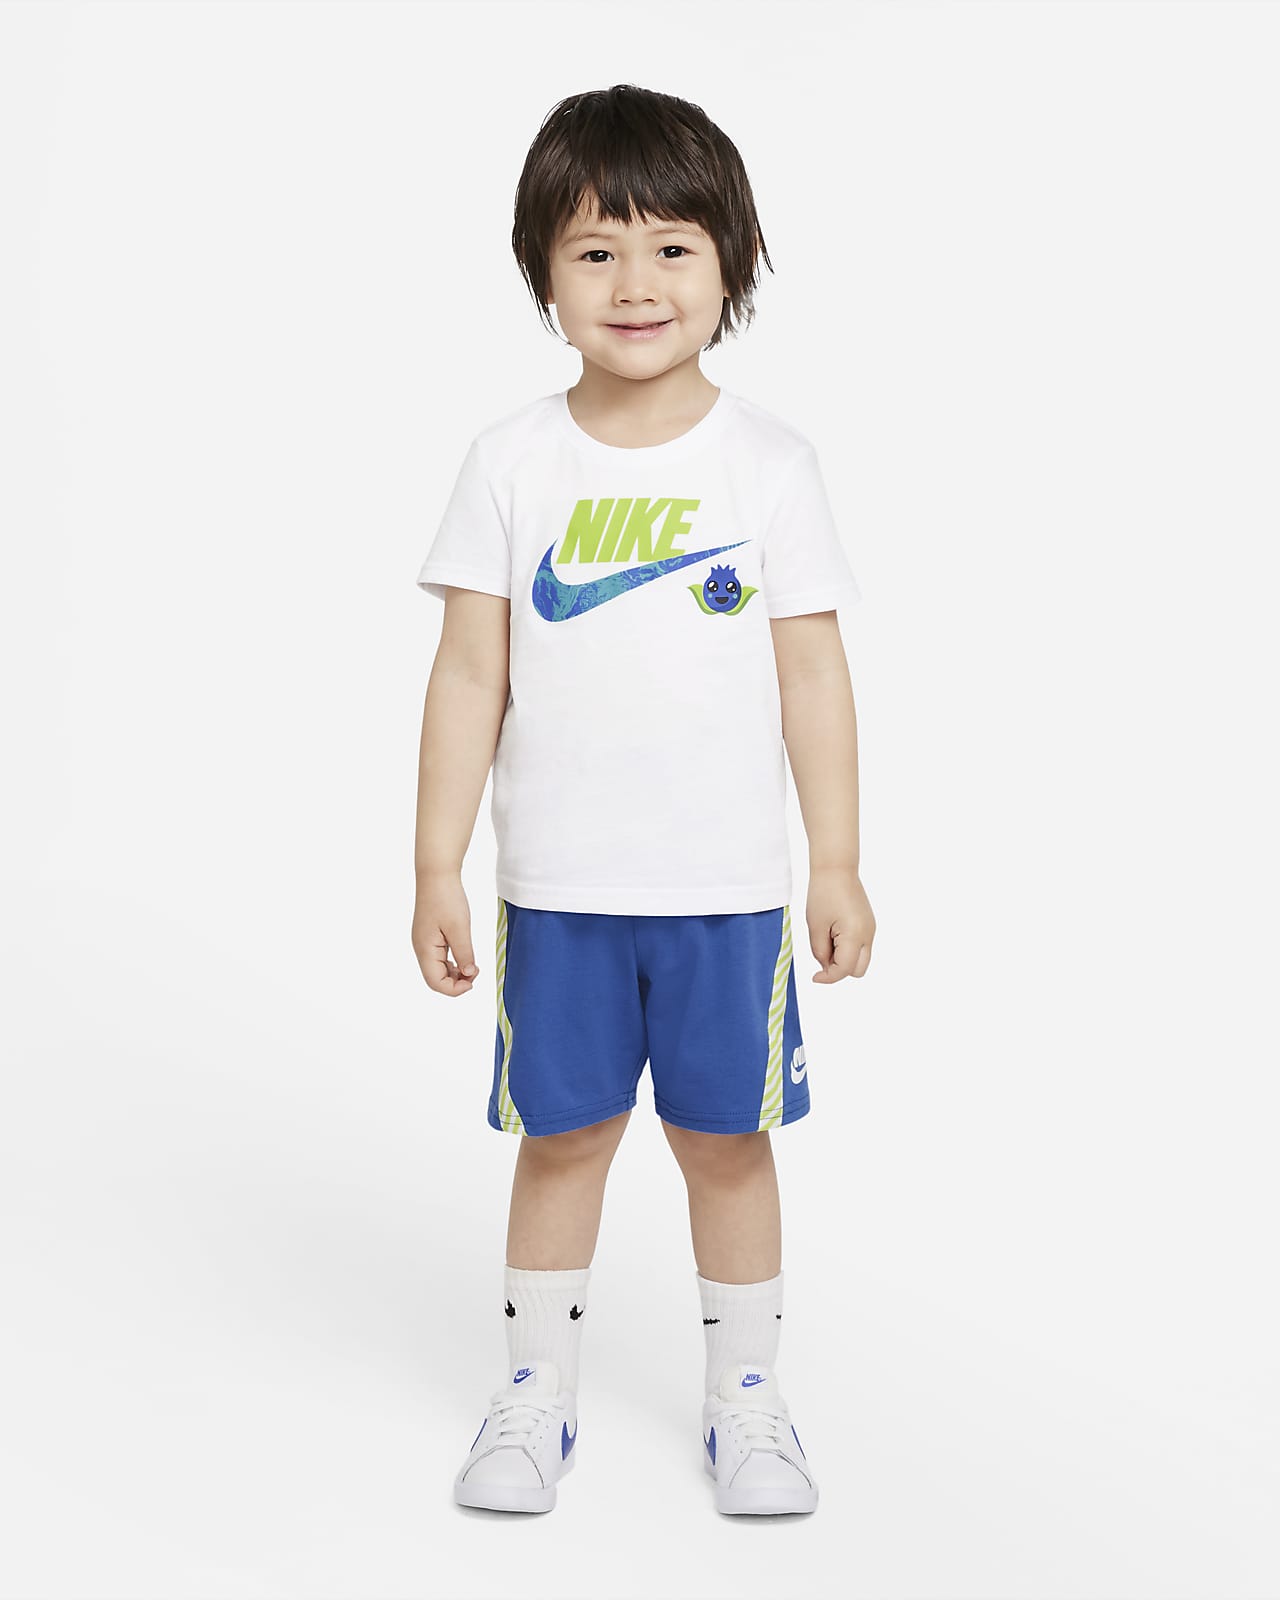 Nike Sportswear Conjunt de samarreta i pantalons curts - Infant